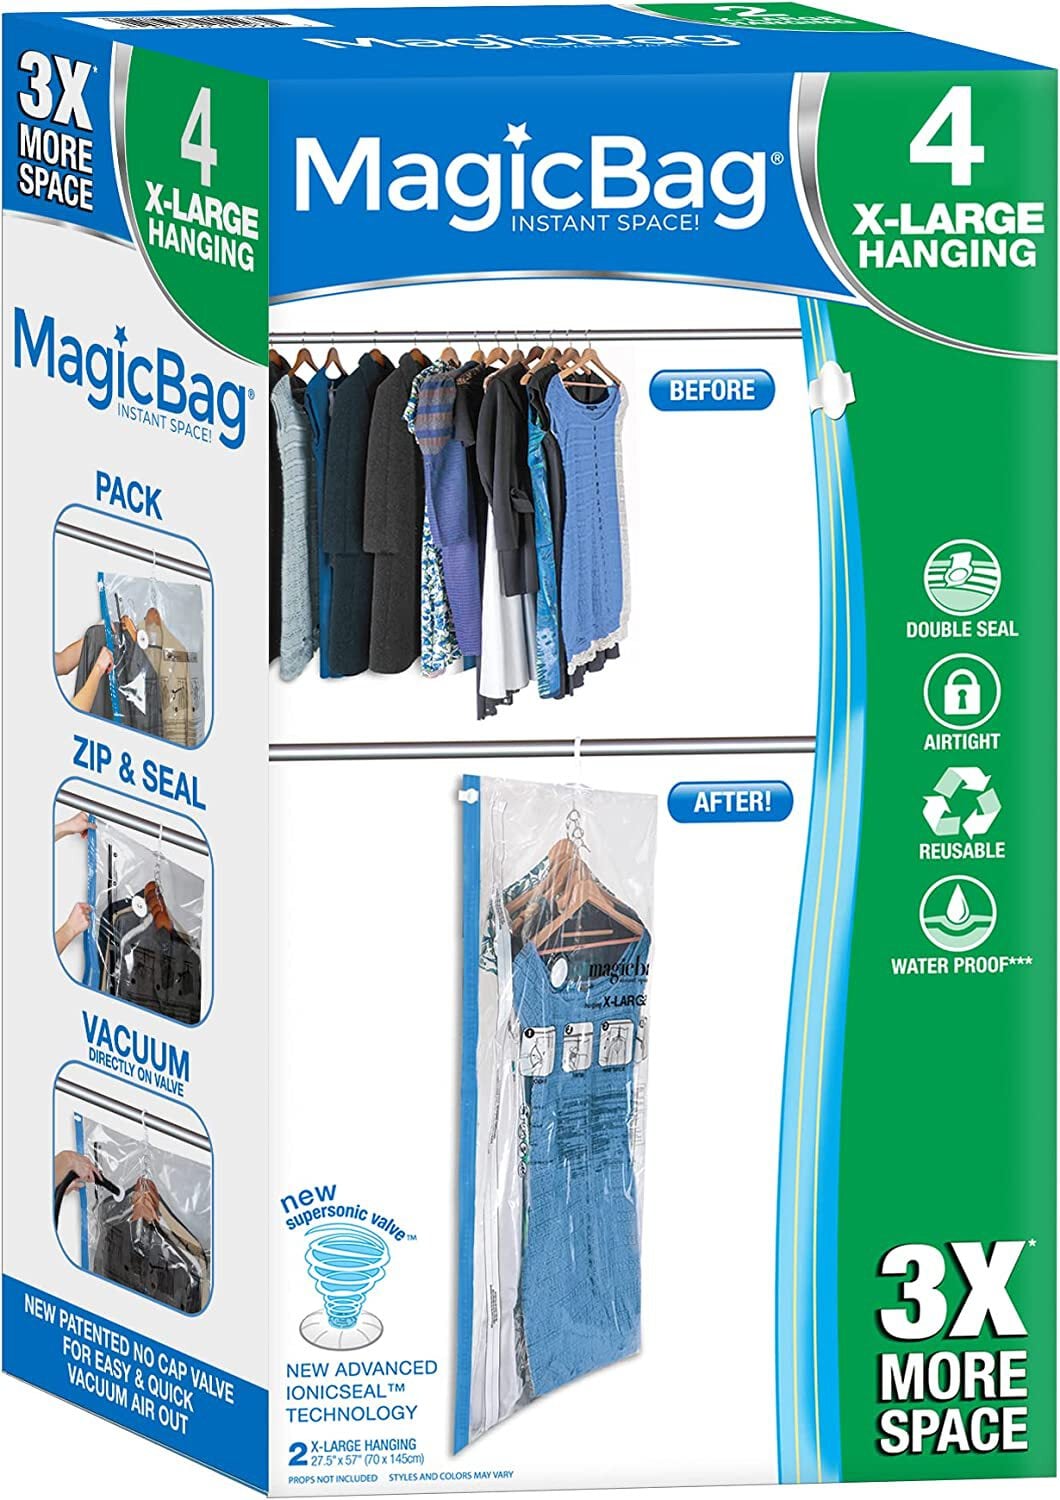 Magicbag Extra Large Flat Space Saver Bags